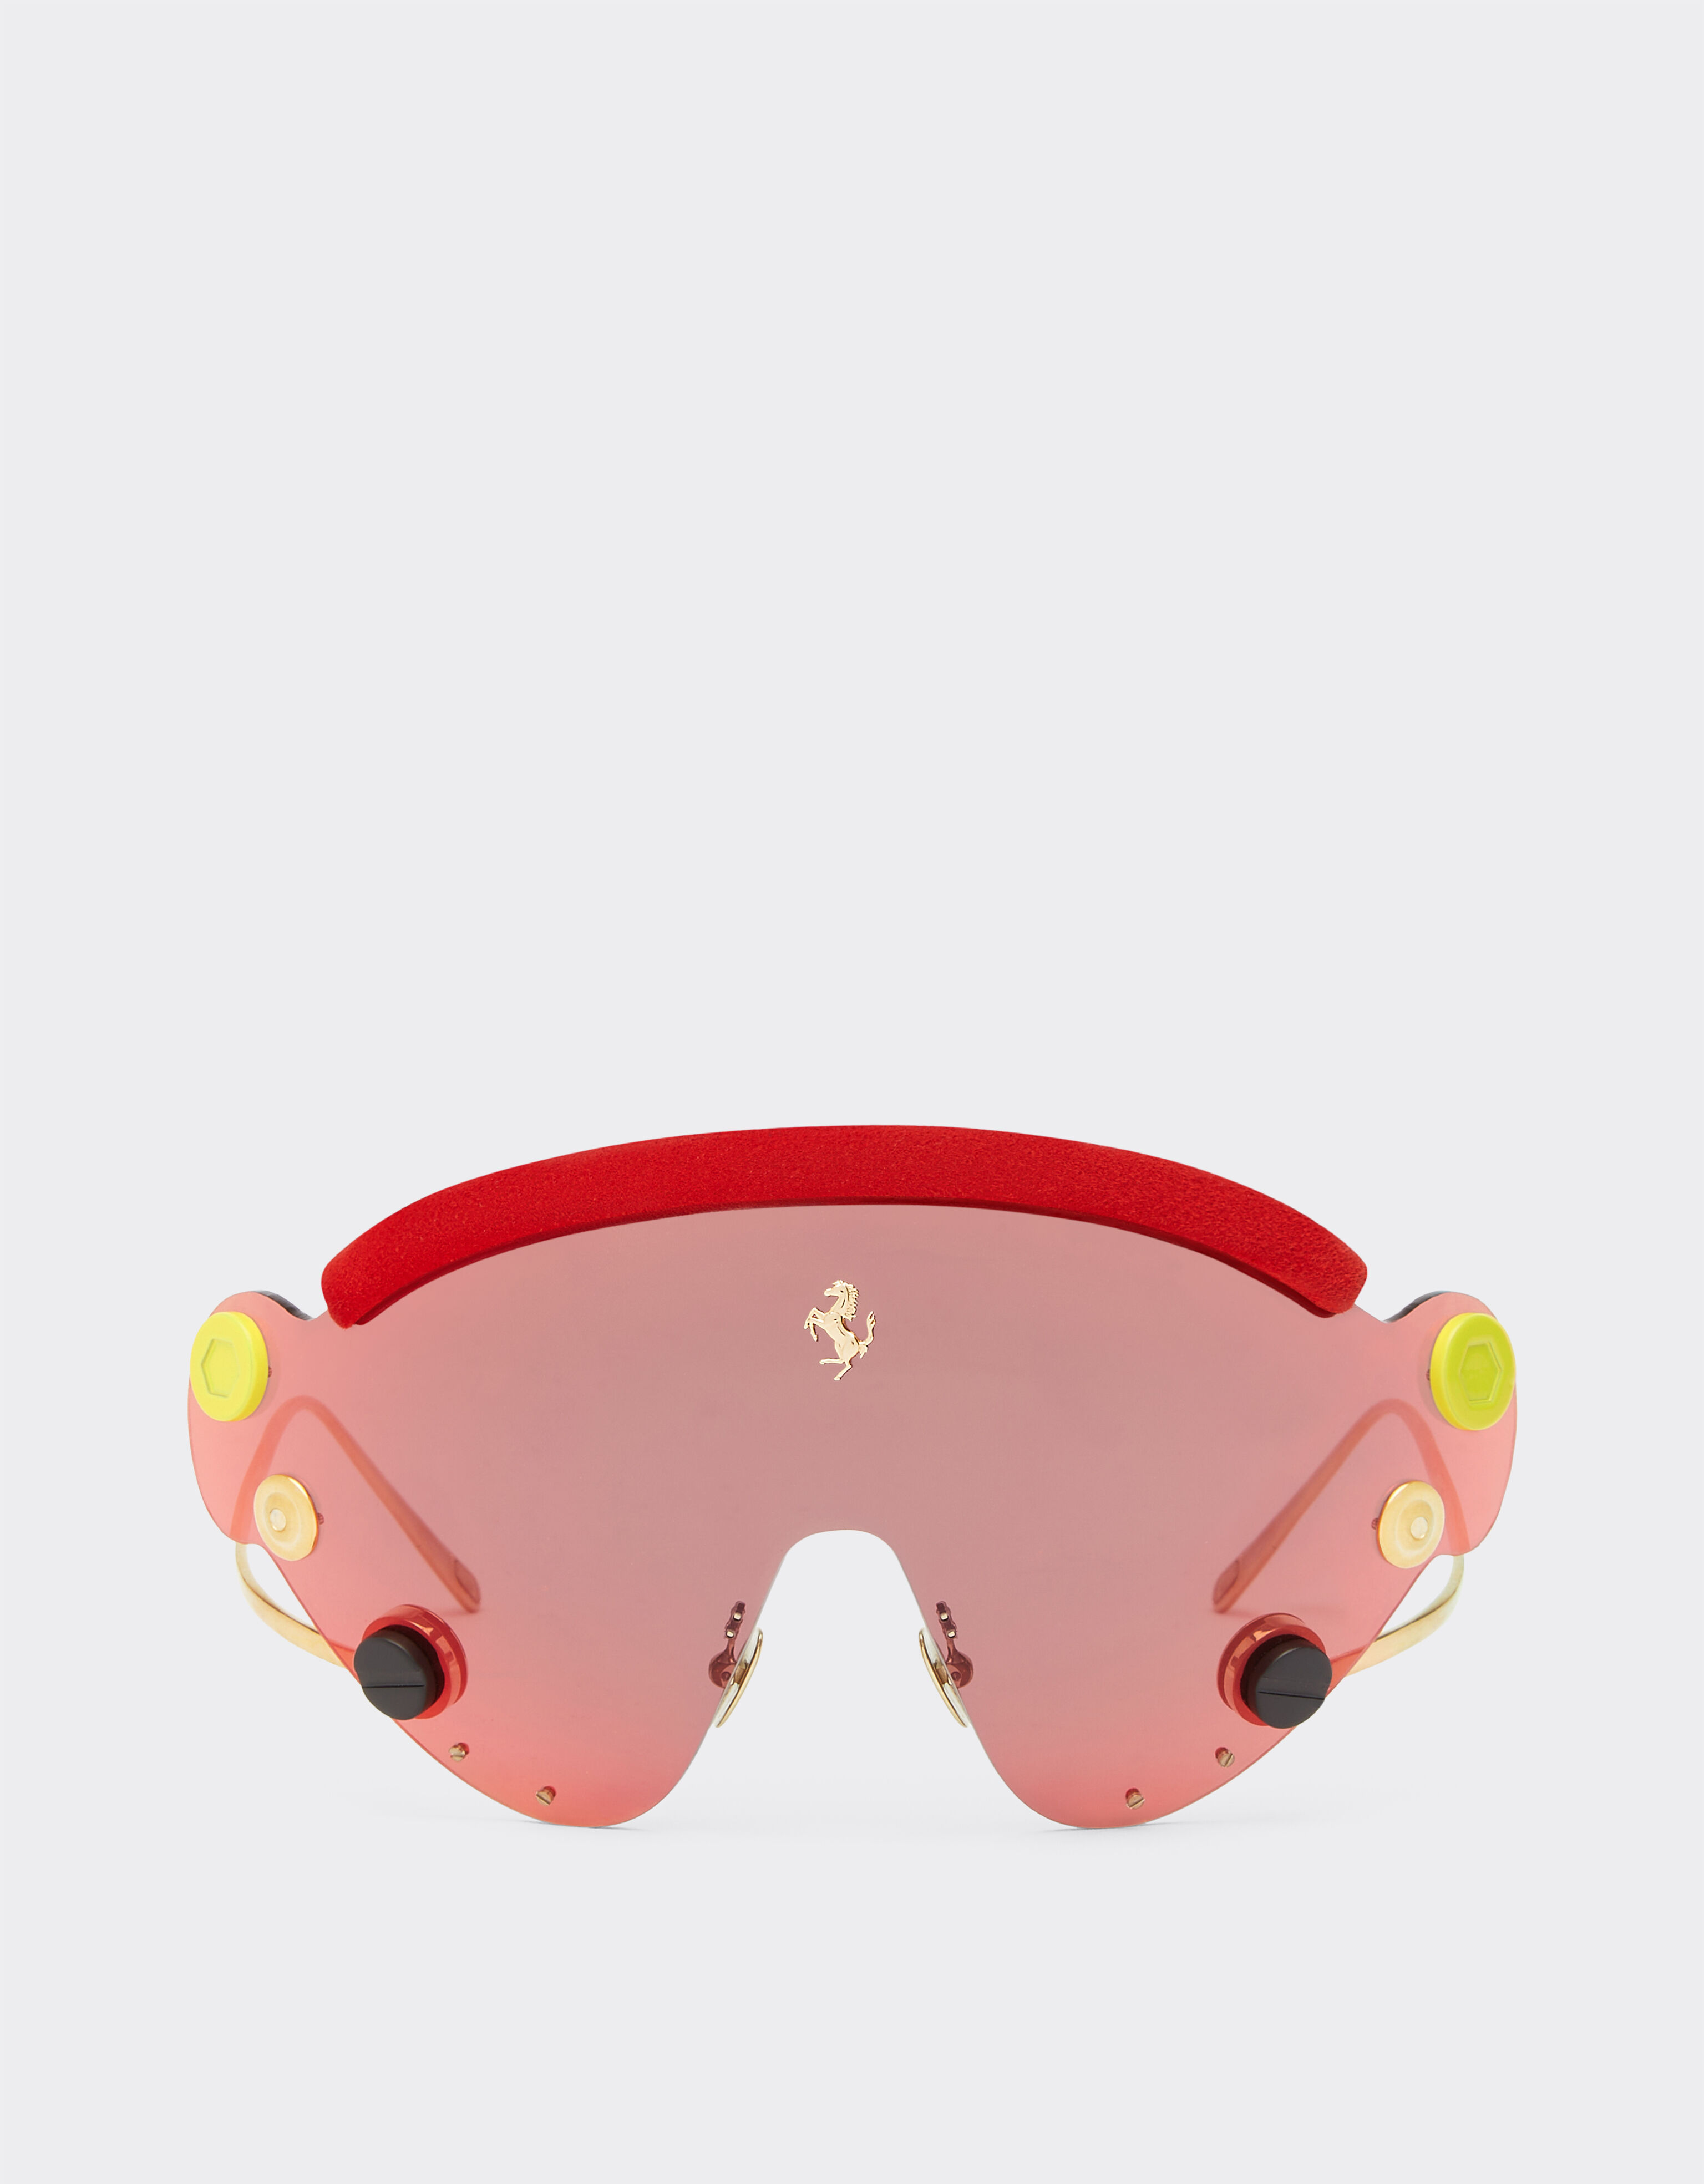 Ferrari Limited Edition Ferrari sunglasses in red and gold-tone metal with red mirror shield Silver F1248f